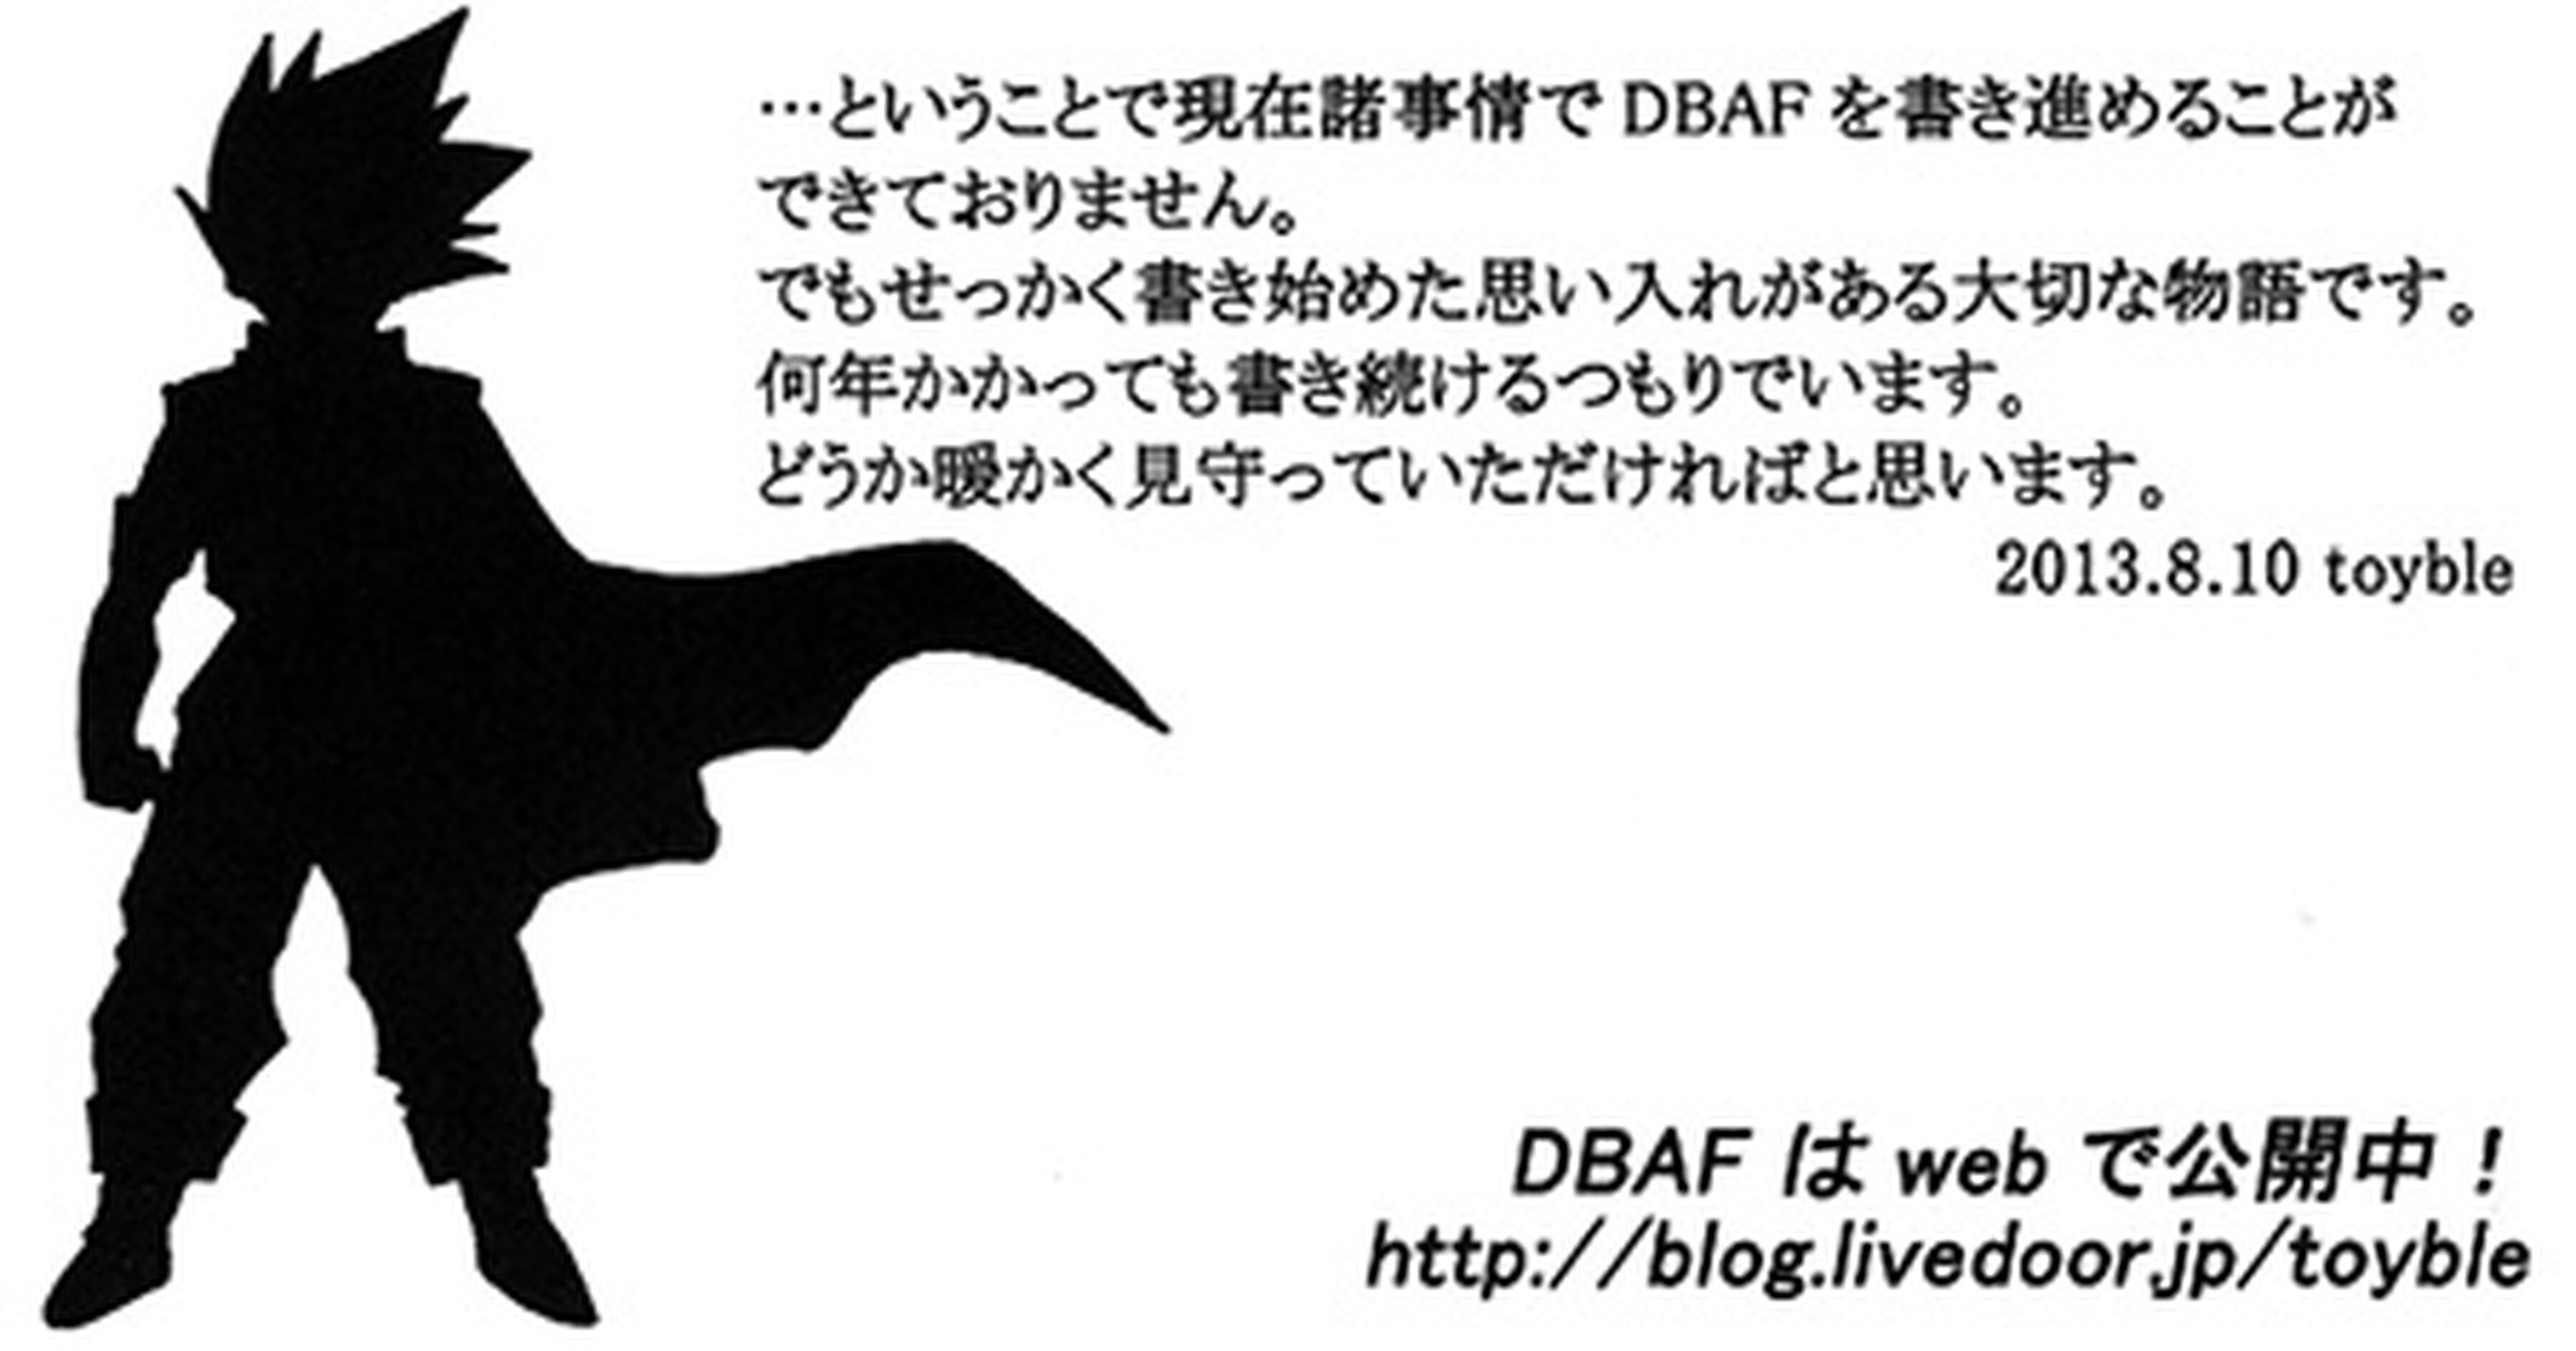 Toyotaro, dibujante de Dragon Ball Super, prometió continuar su manga de Dragon Ball AF